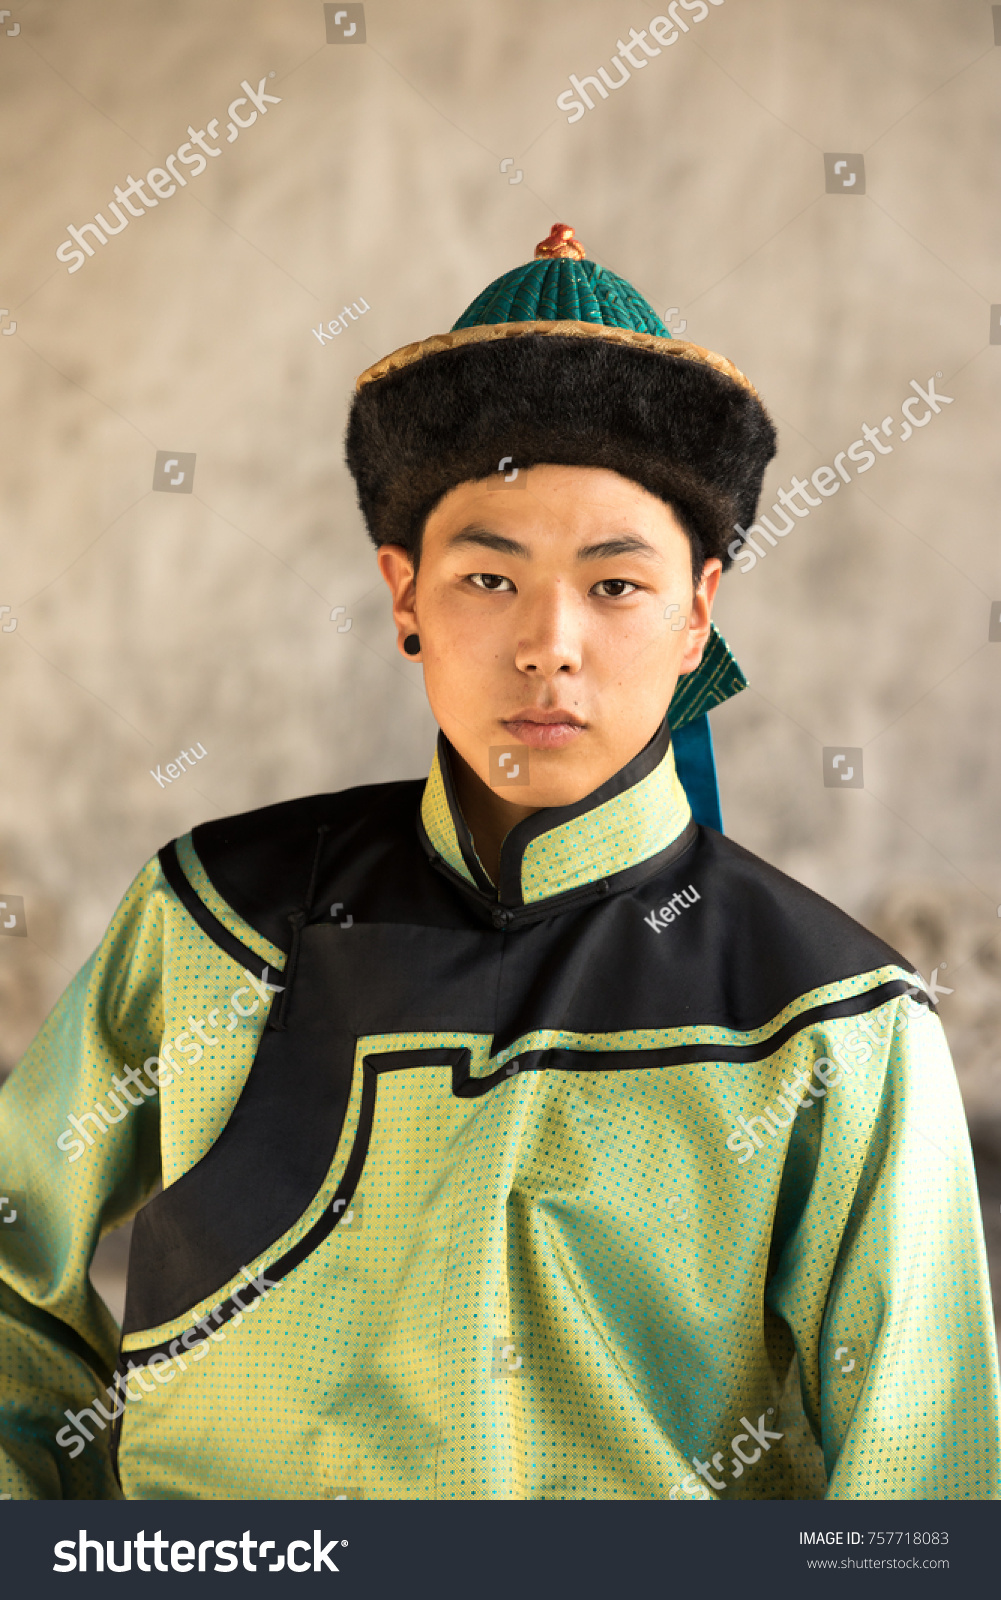 Pin on Mongolian clothing